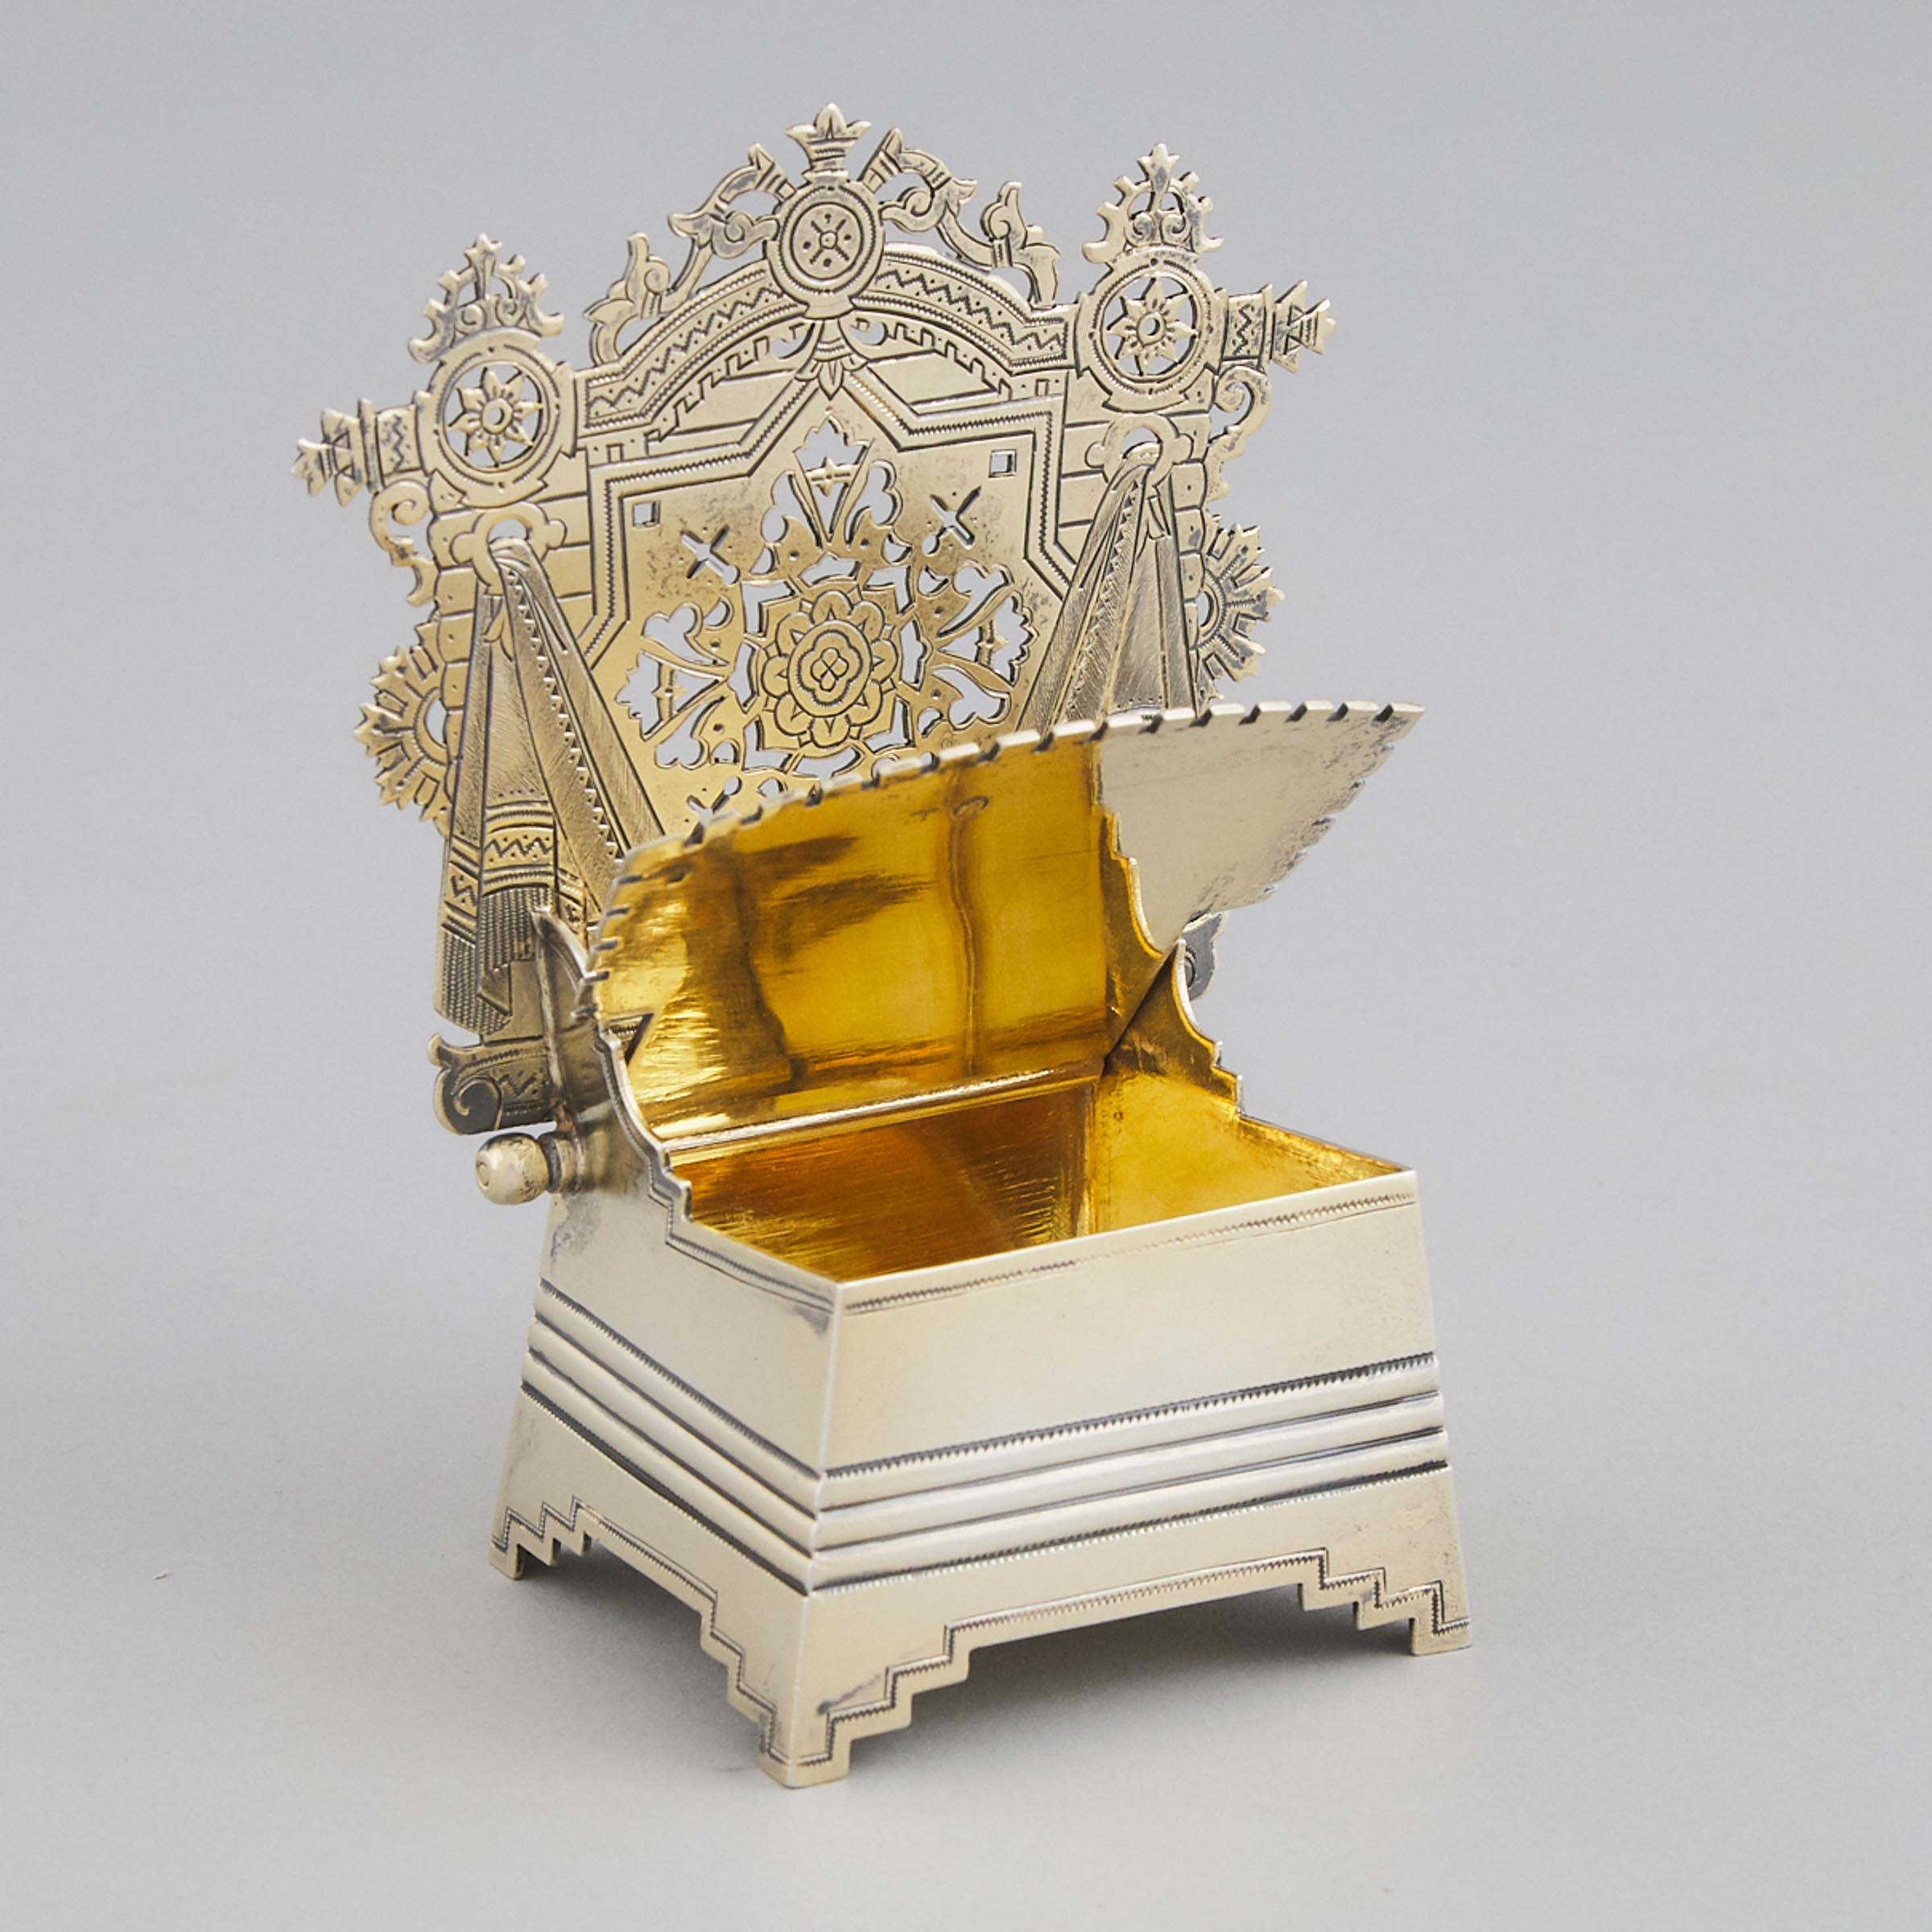 Russian Silver-Gilt Salt Chair, Alexander Fulid, Moscow, late 19th century